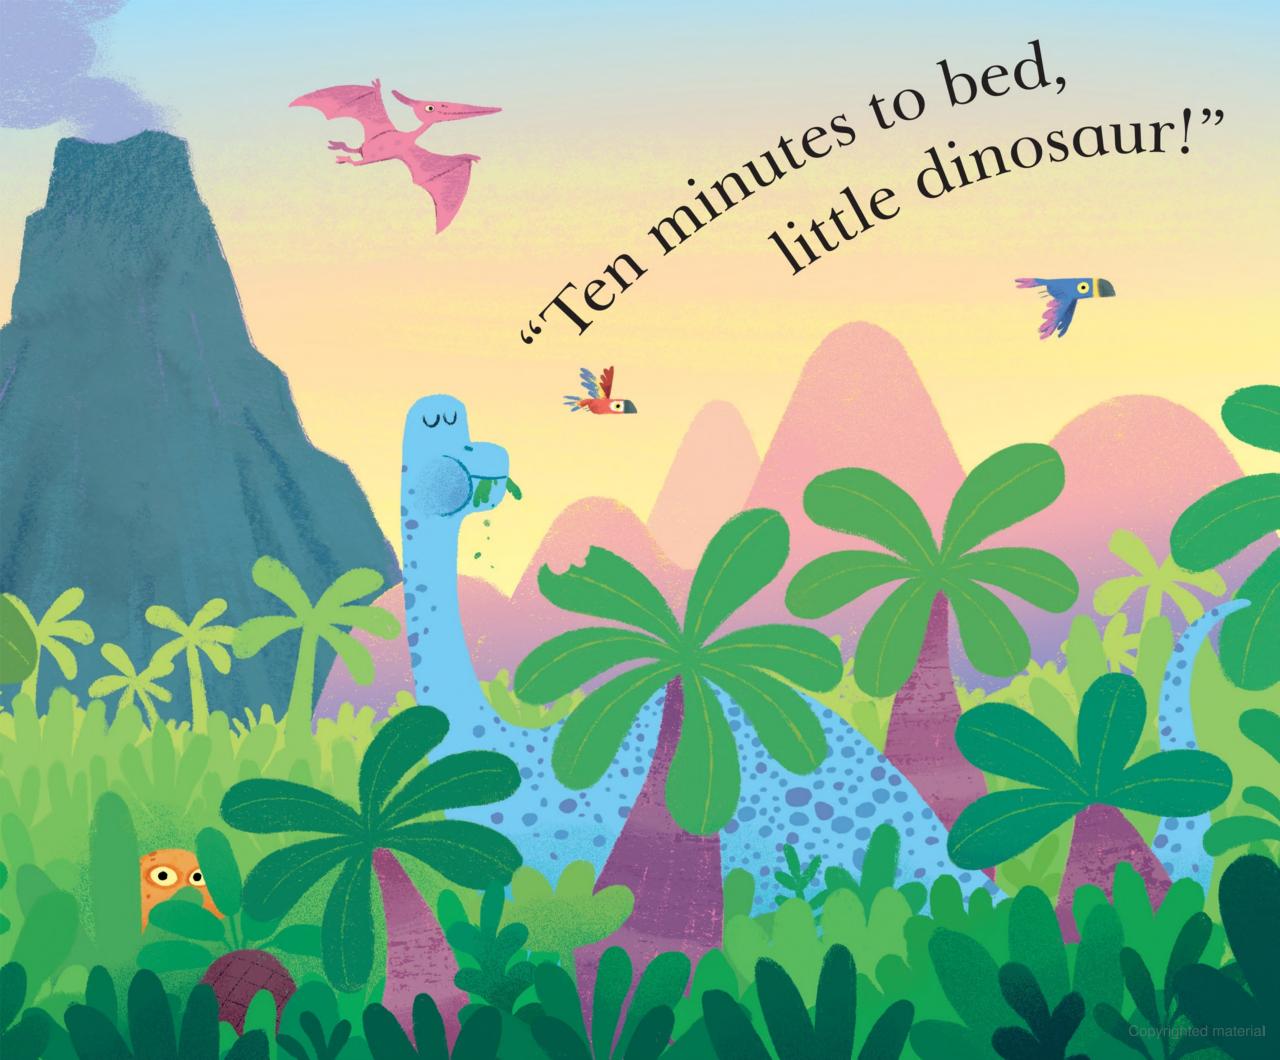 Ten Minutes to Bed: Little Dinosaur